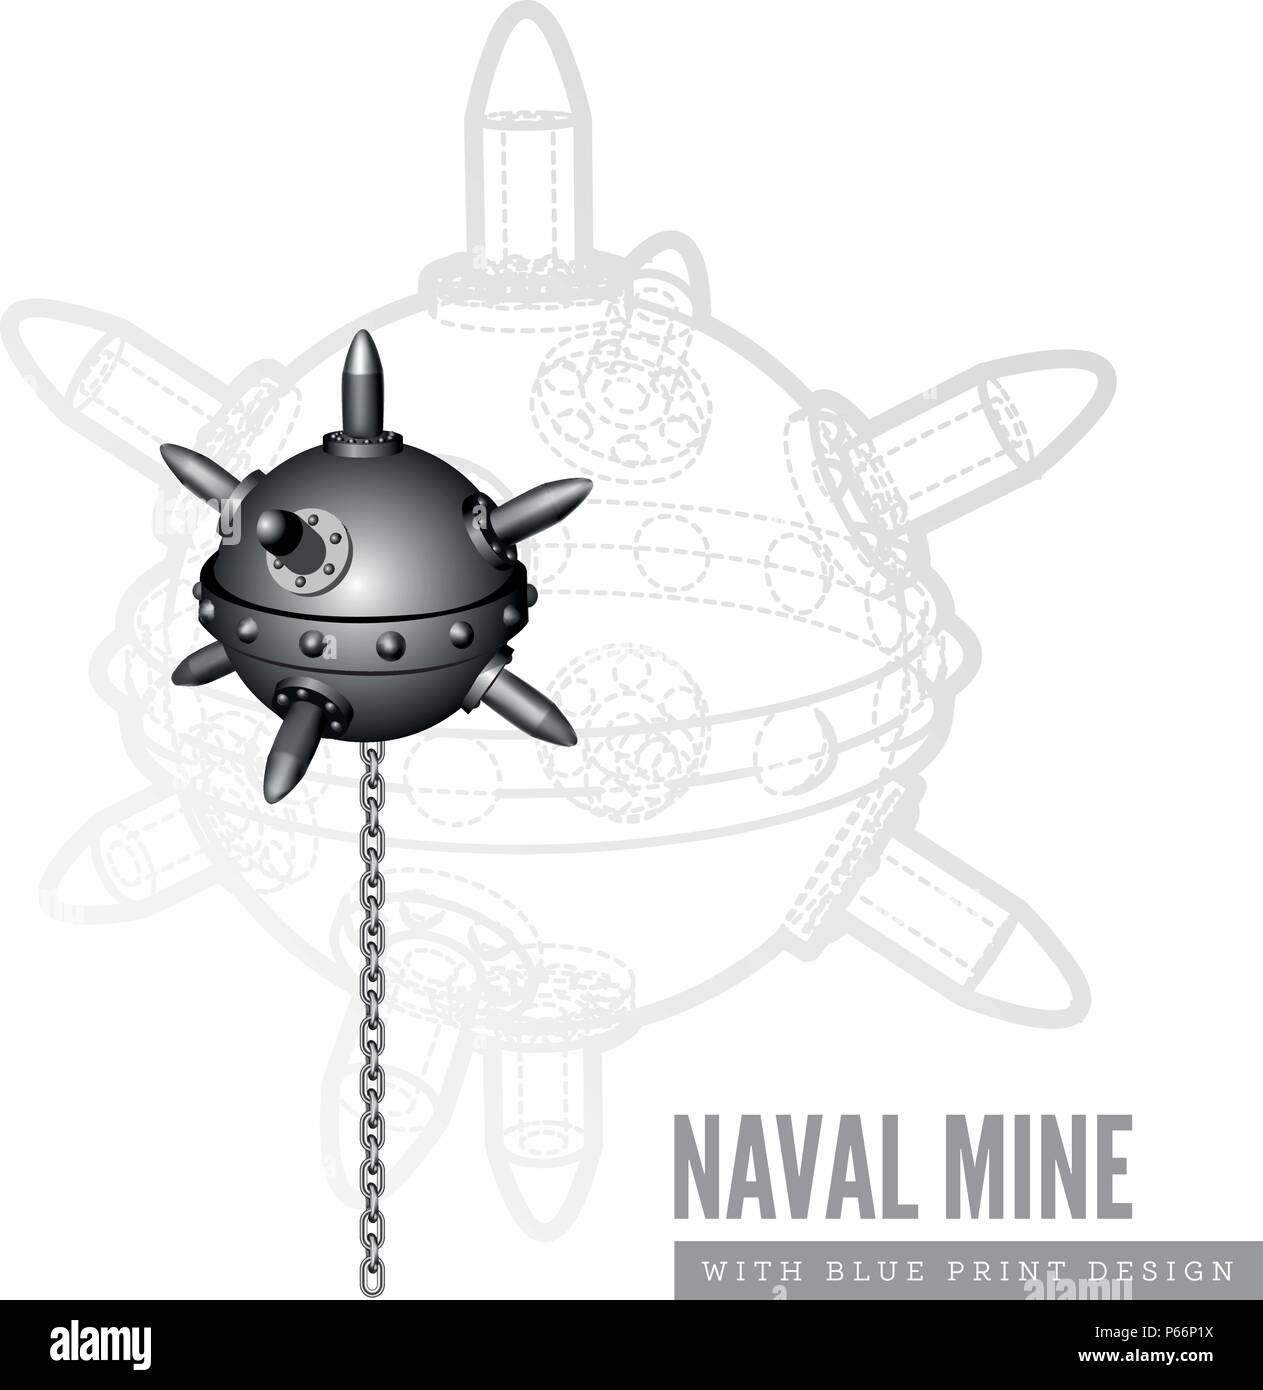 Naval mine vector illustration Stock Vector